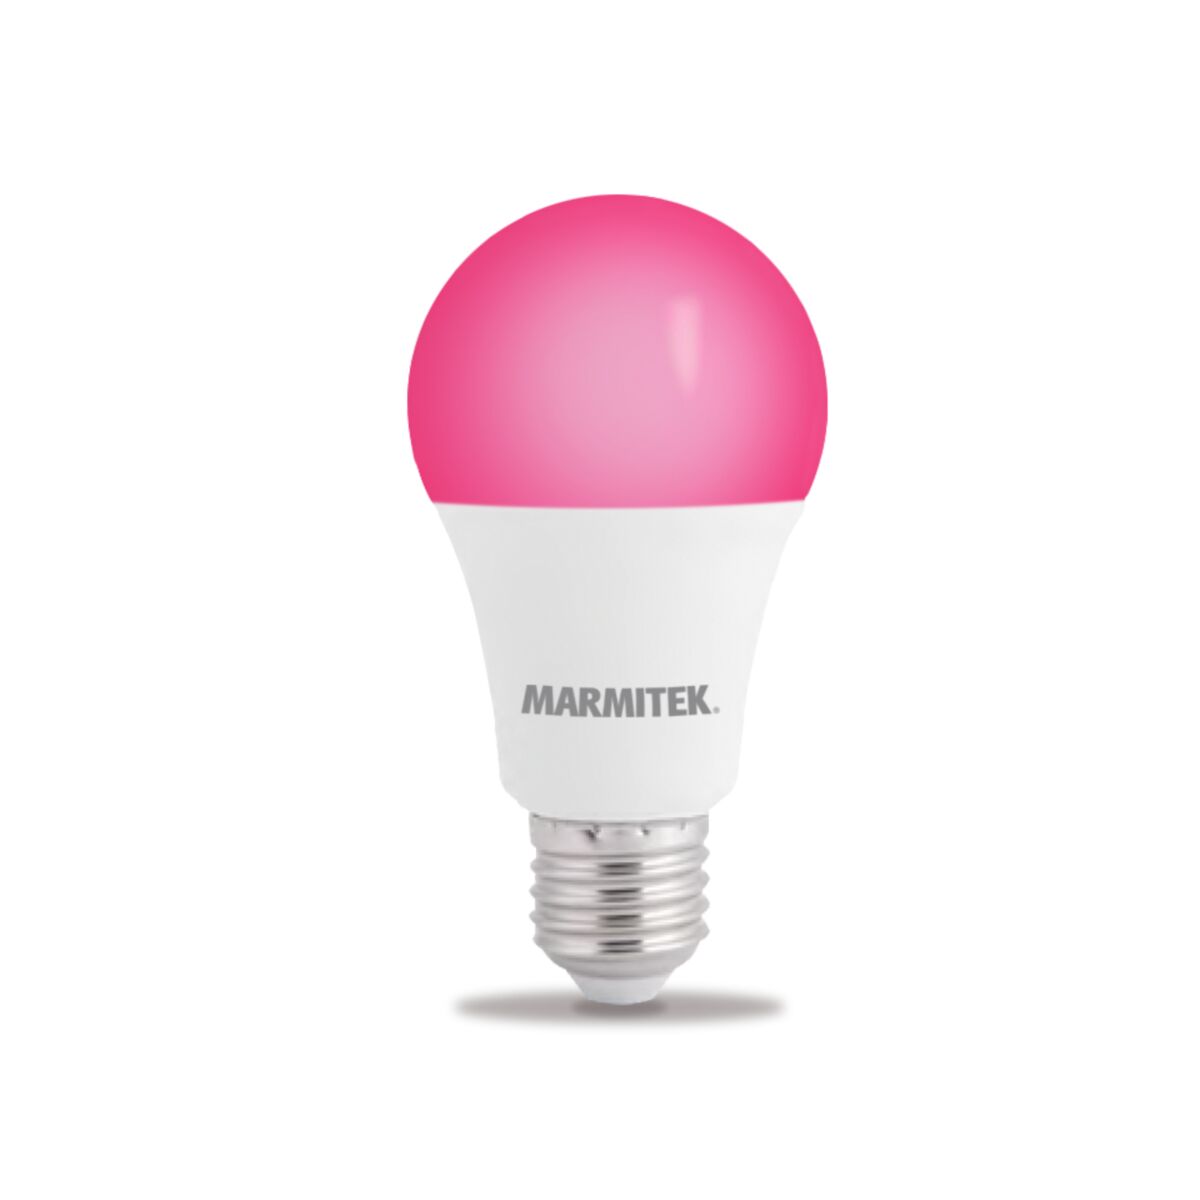 Glow MO - Lampadina intelligente - E27 - Colore